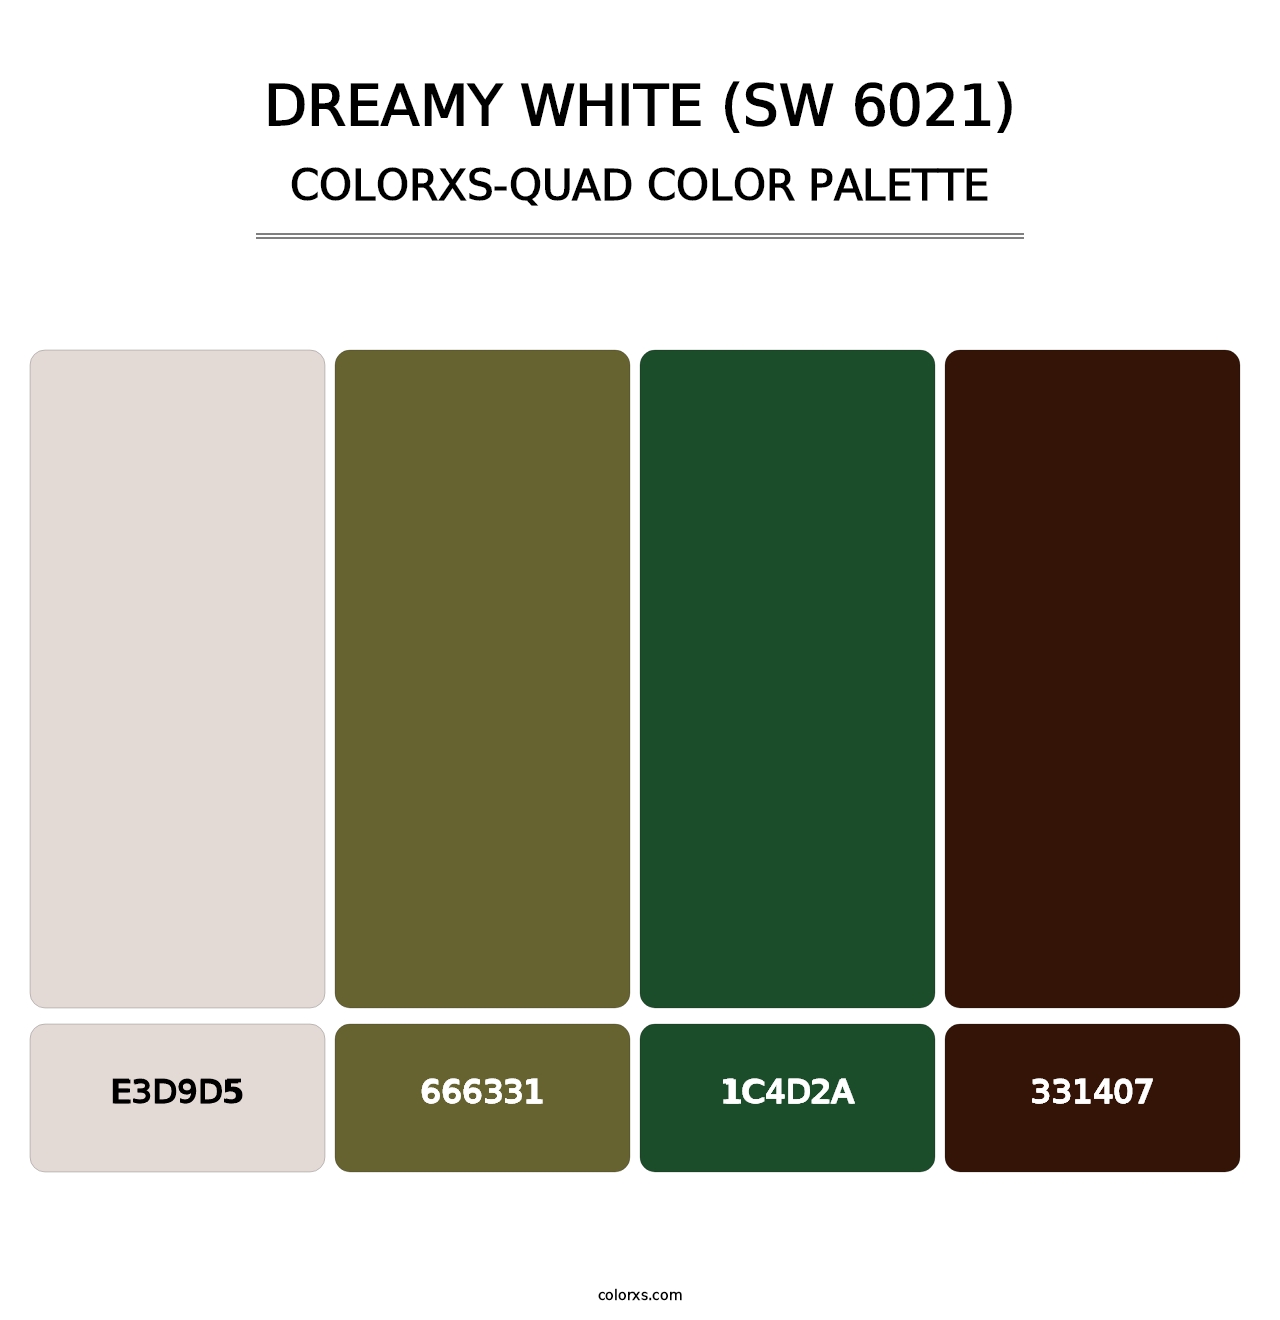 Dreamy White (SW 6021) - Colorxs Quad Palette